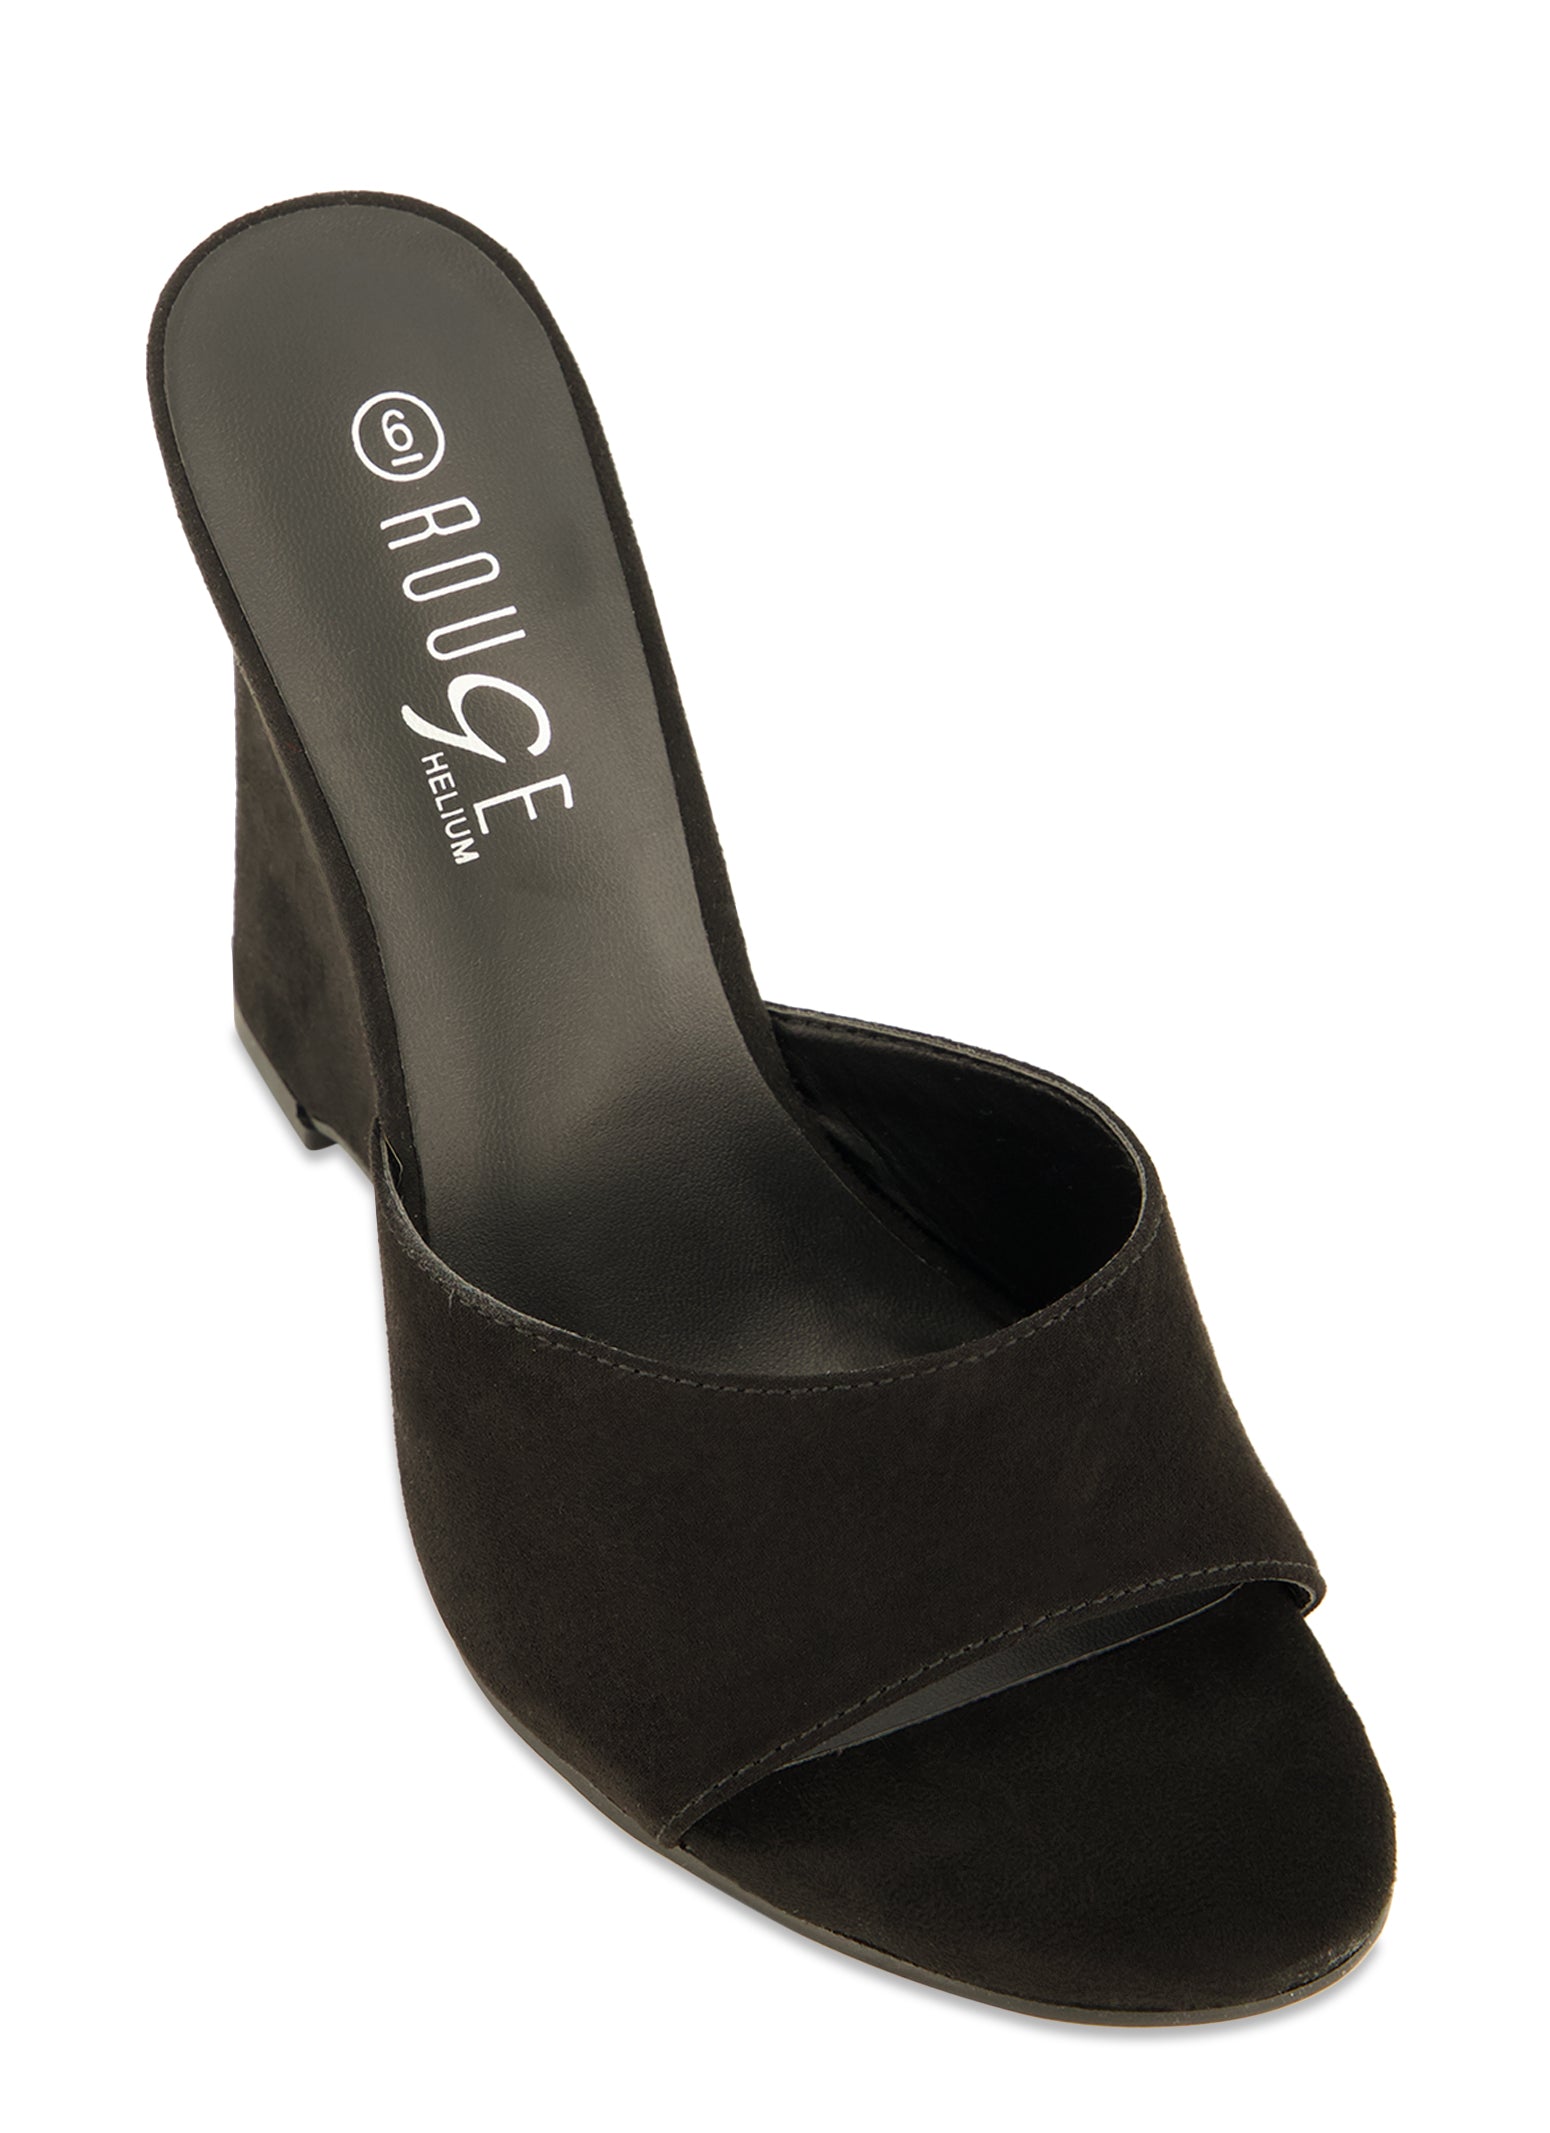 Womens Round Toe Wedge Slide Sandals, Black, Size 6